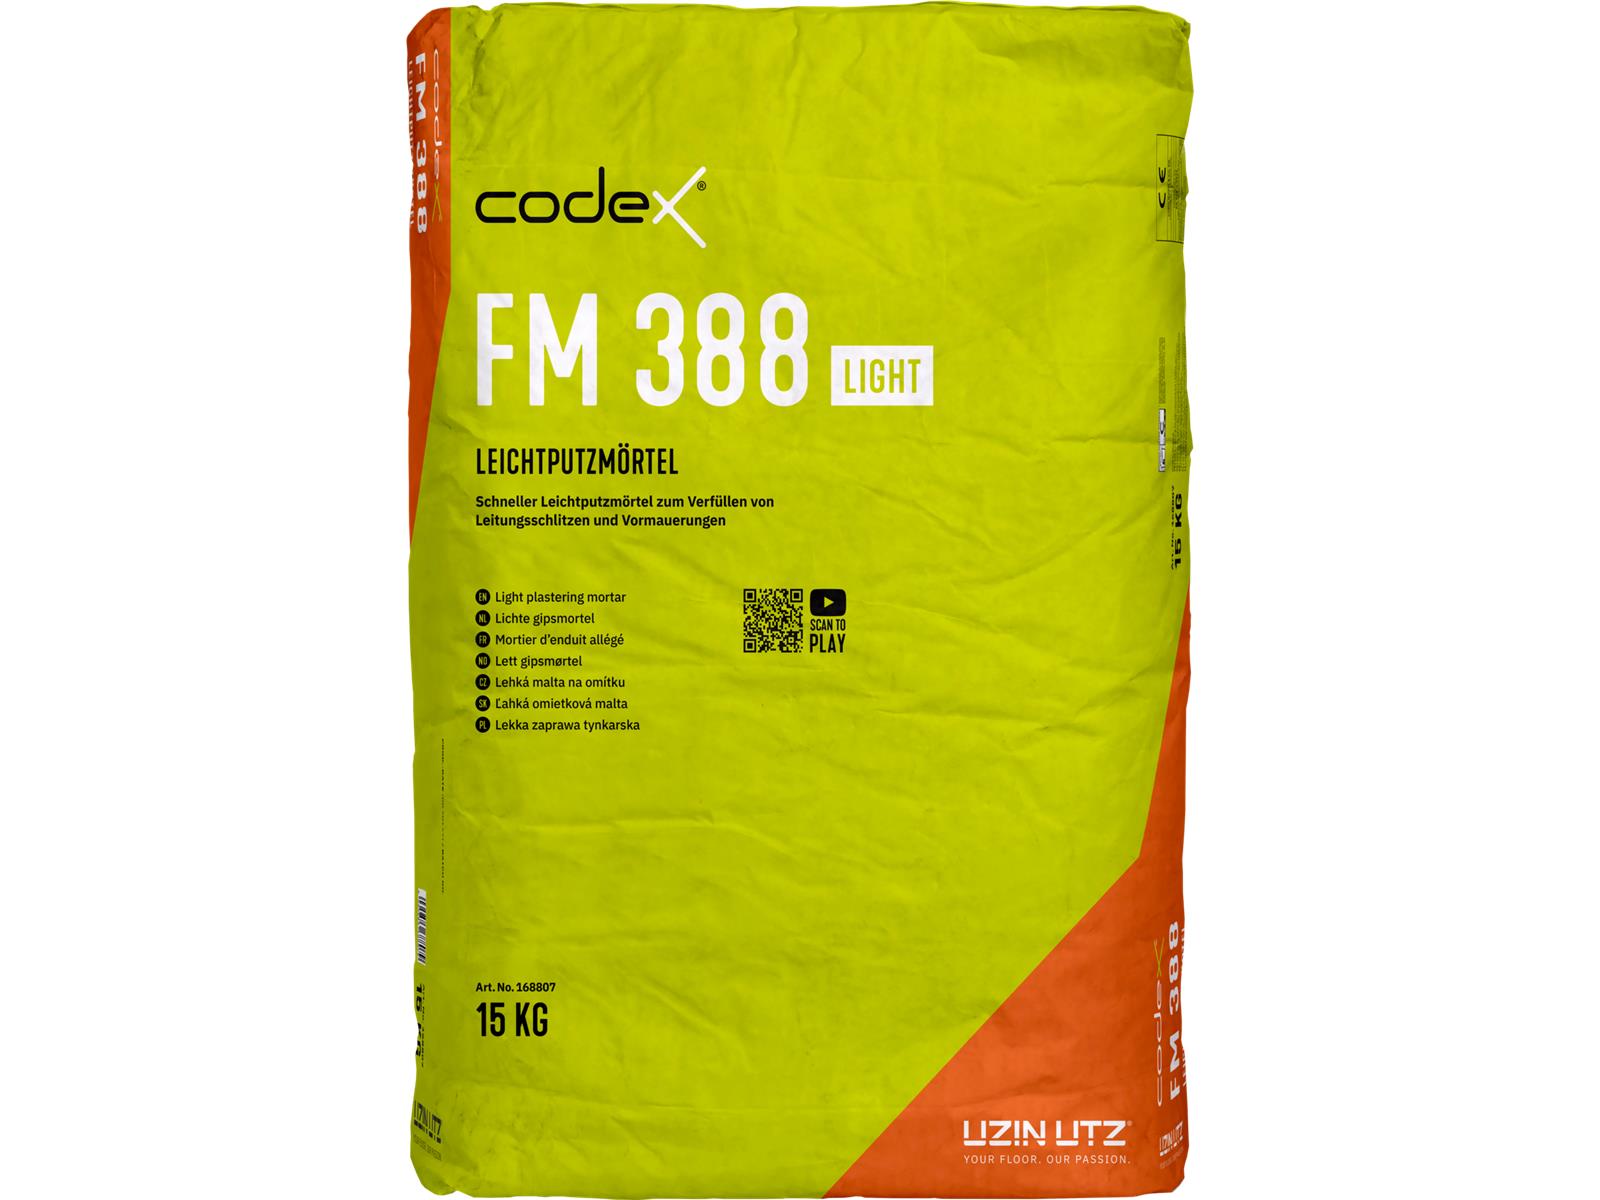 codex FM 388 Light -15 kg